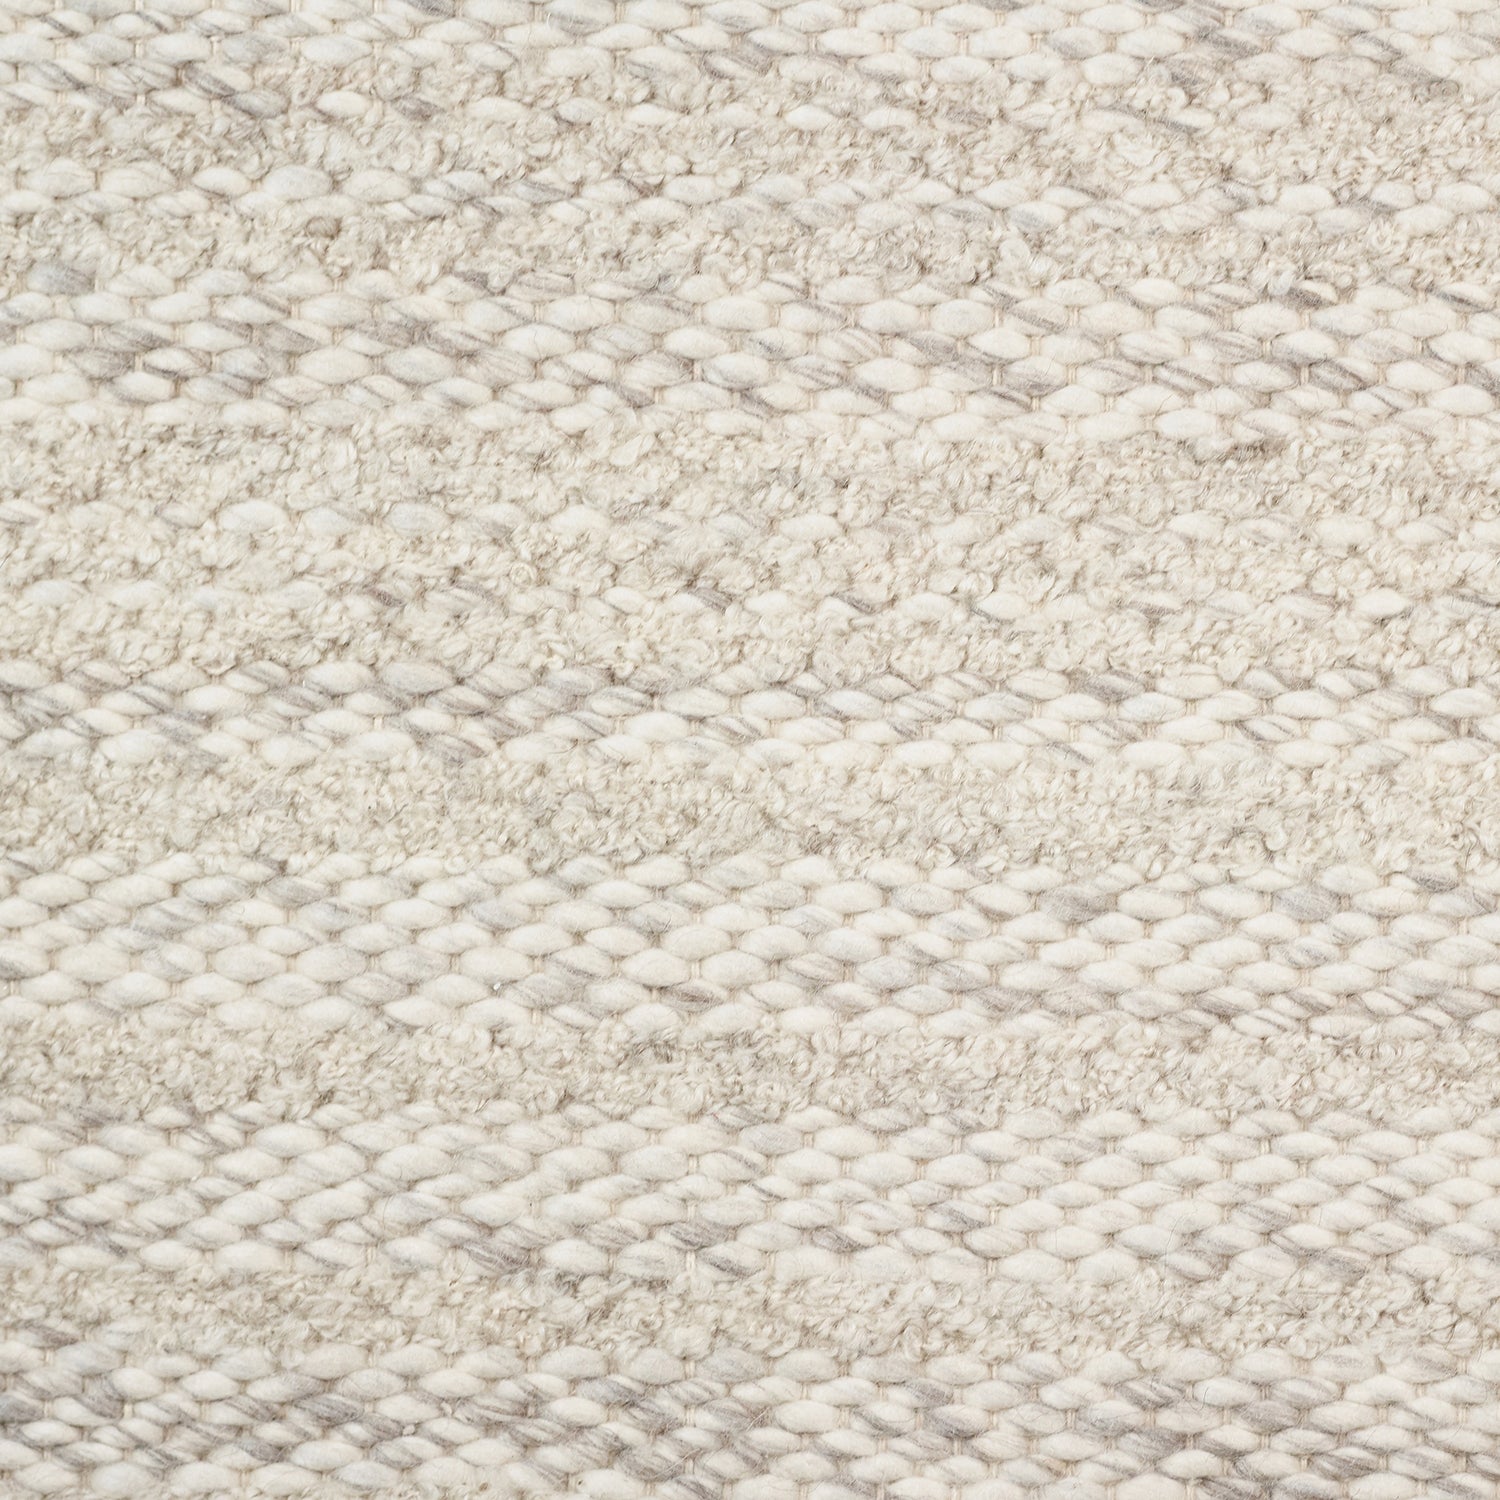 Wool broadloom carpet swatch in a textured stripe weave in cream.